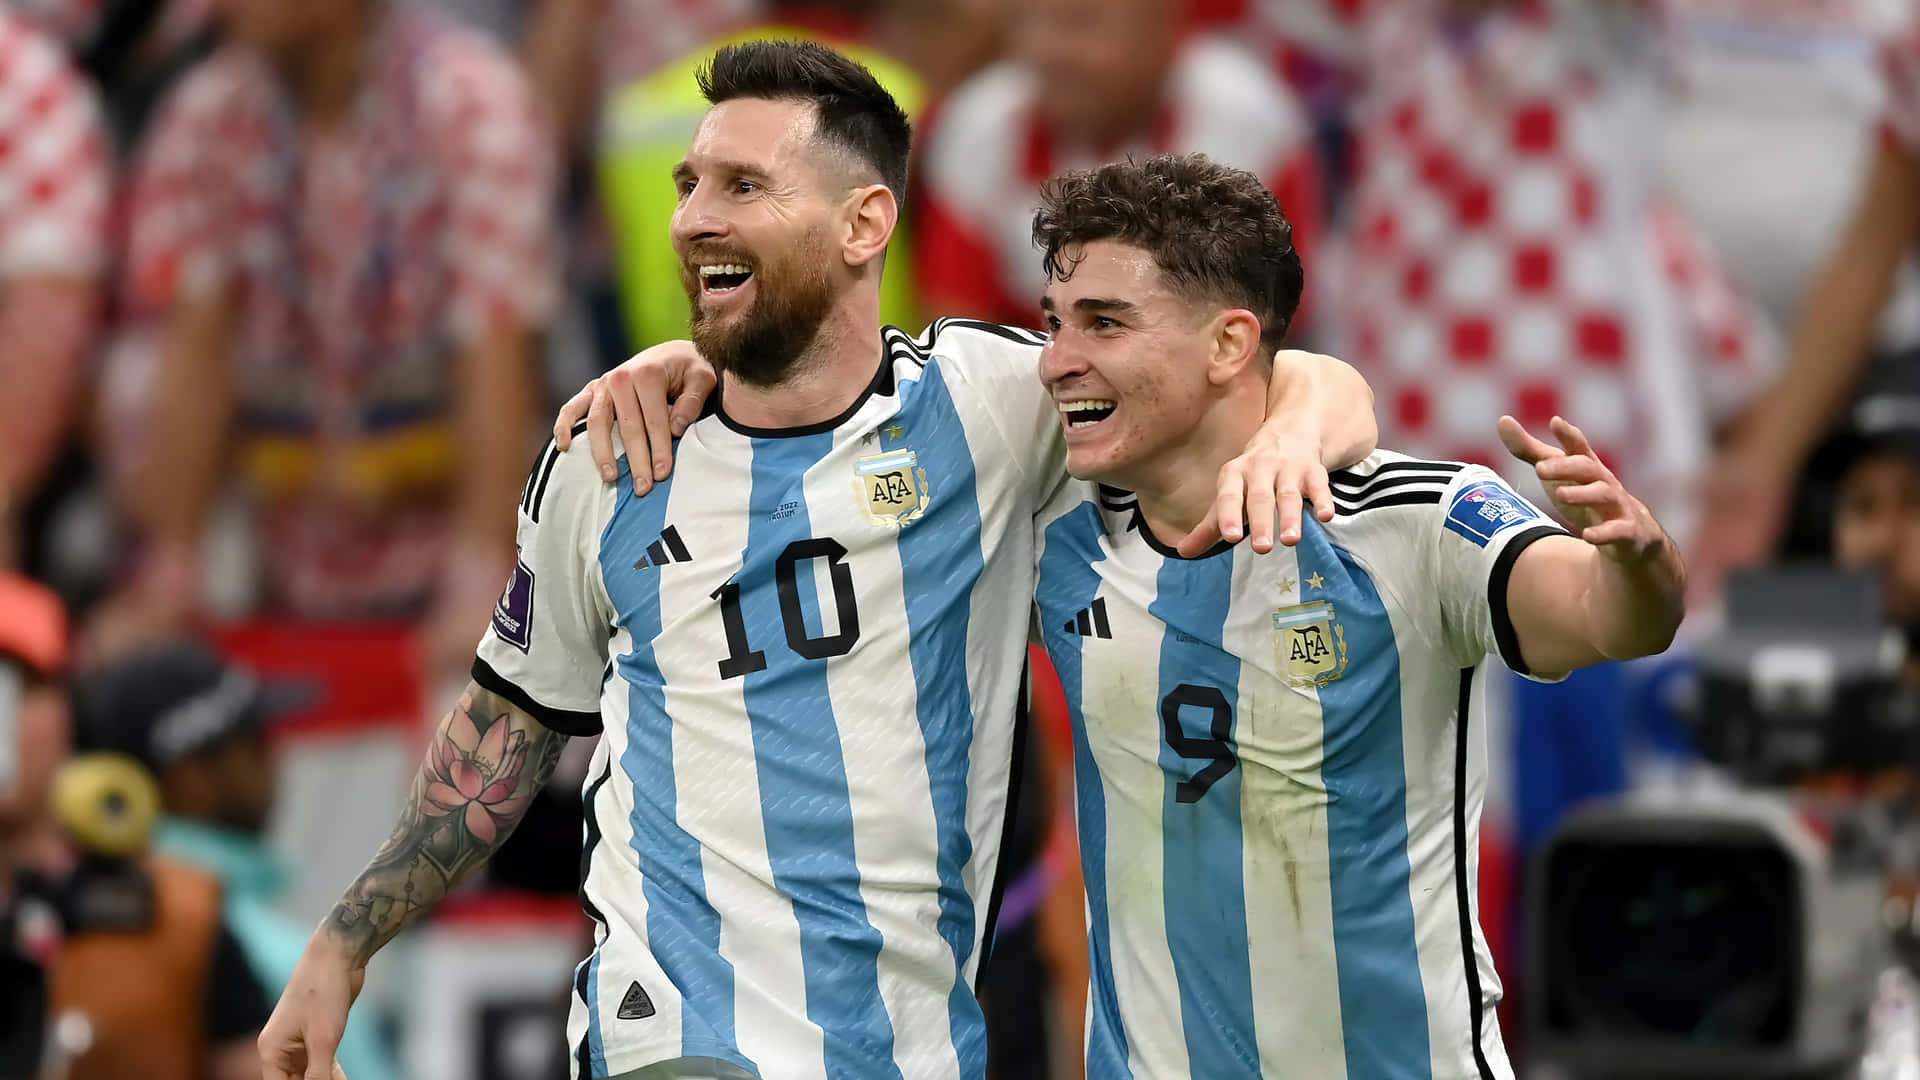 "Argentine soccer legend, Lionel Messi"